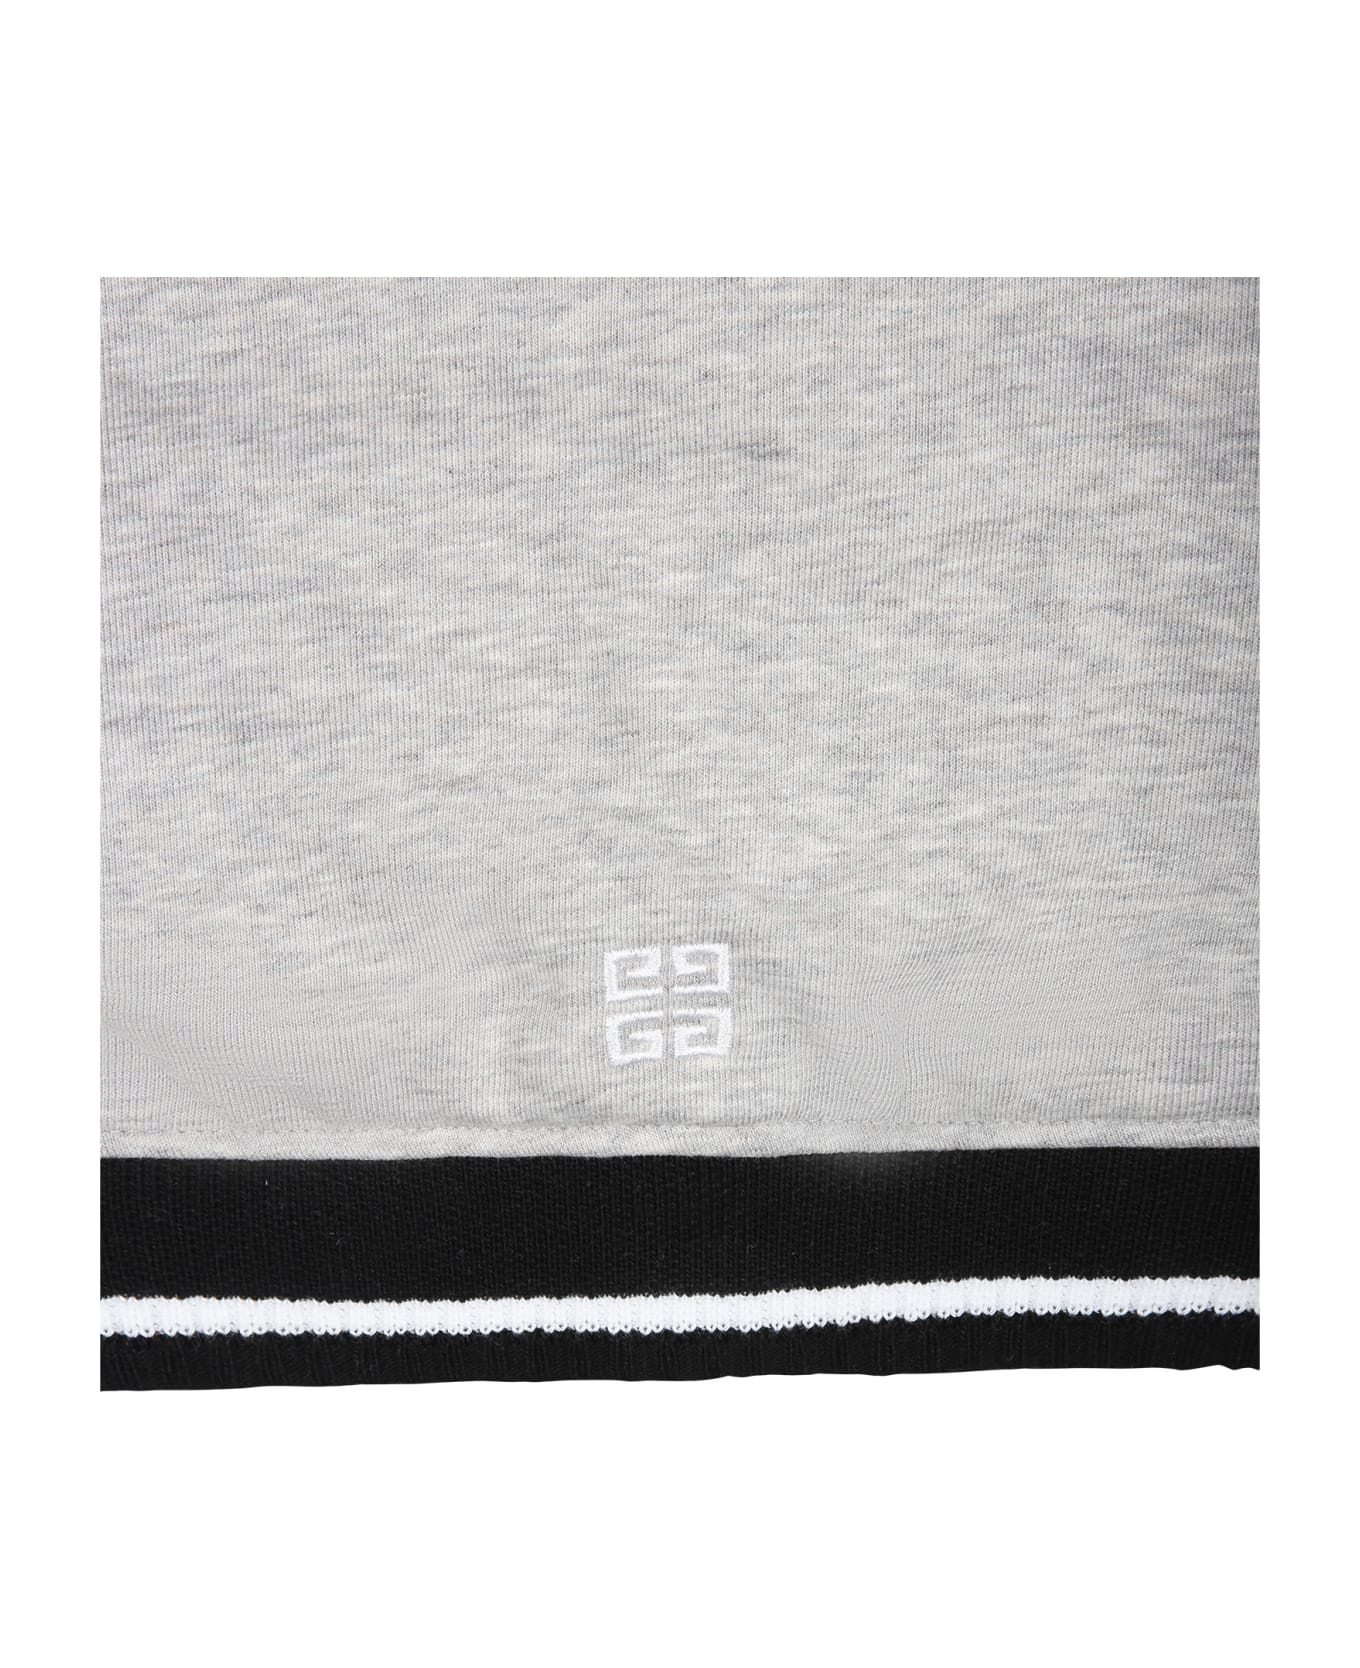 Givenchy Gray Bomber Jacket For Baby Boy With Logo - Grey コート＆ジャケット